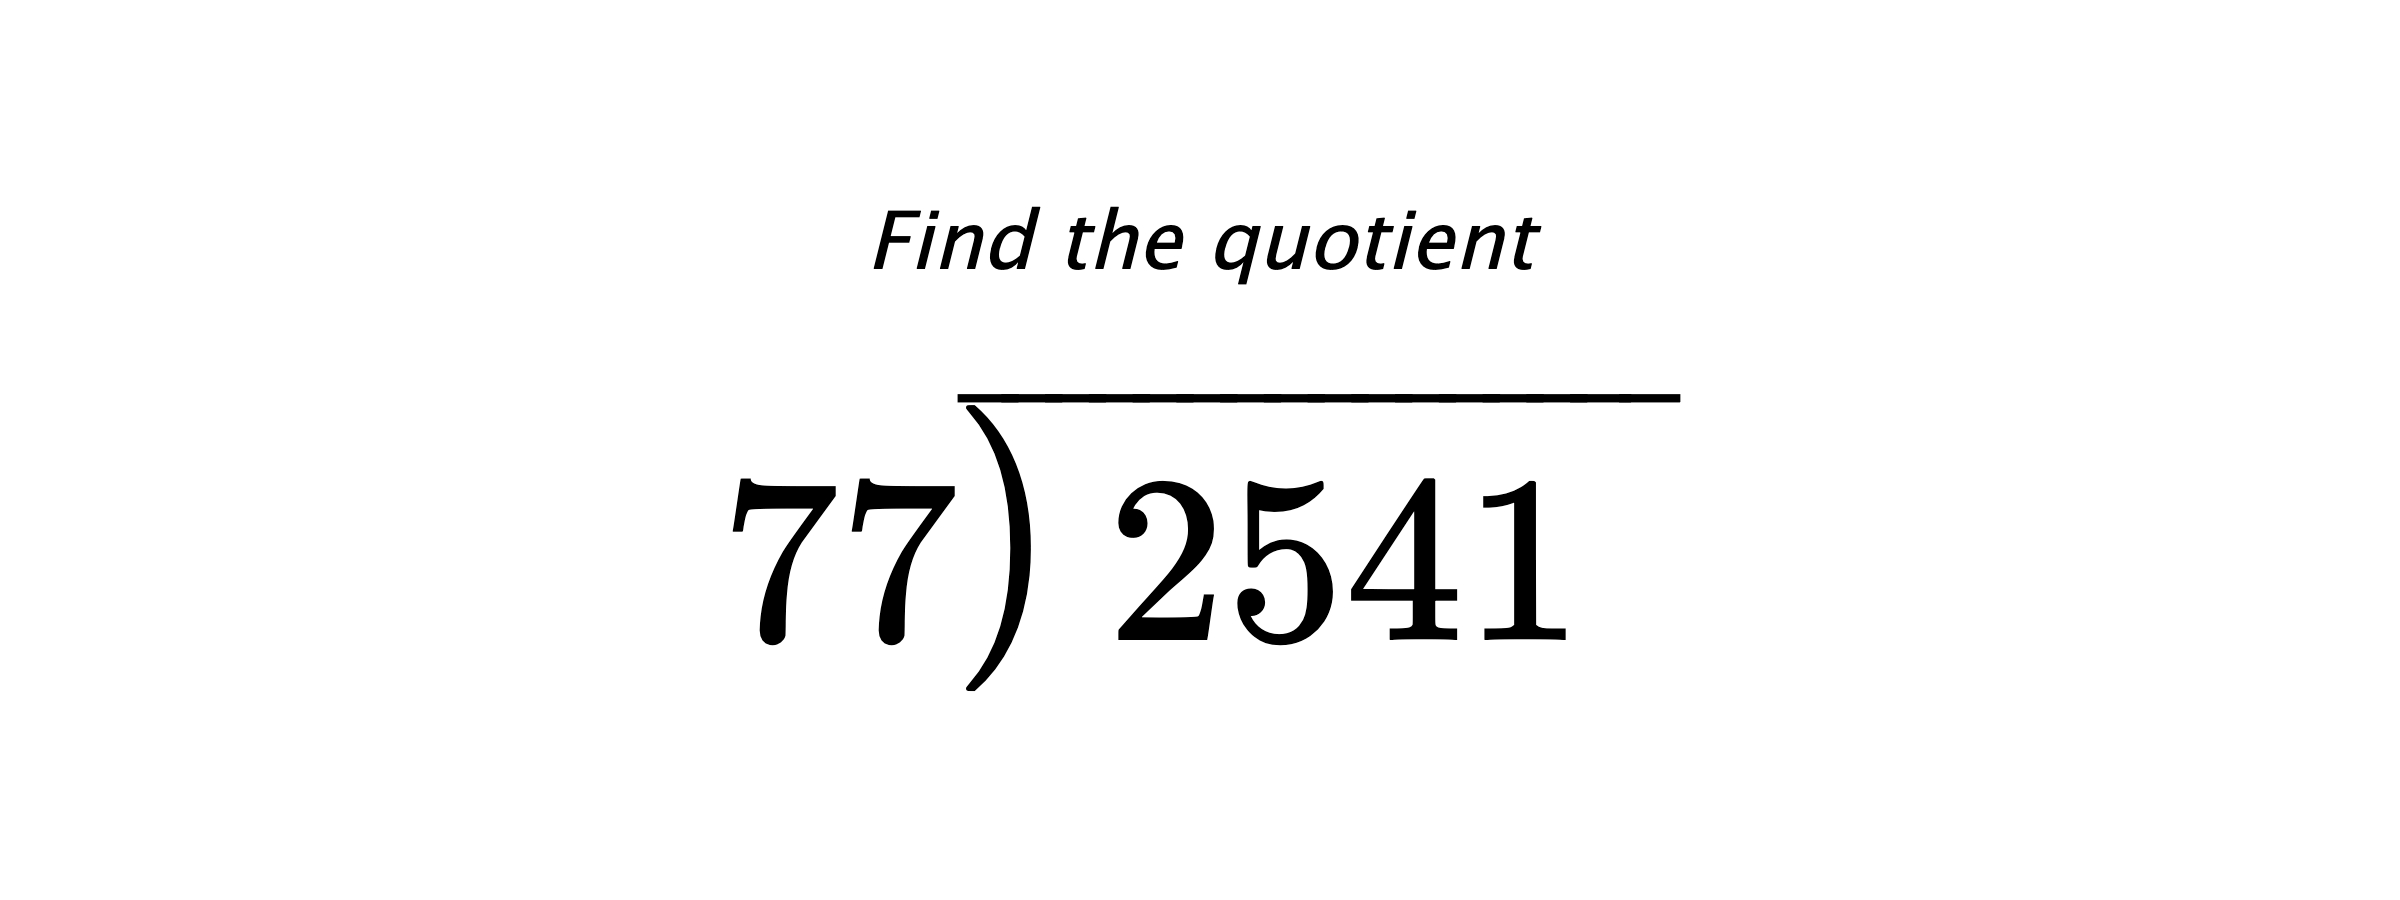 Find the quotient $ 77{\overline{\smash{\raise.3ex\hbox{$\big)$}}\,2541\phantom{)}}} $